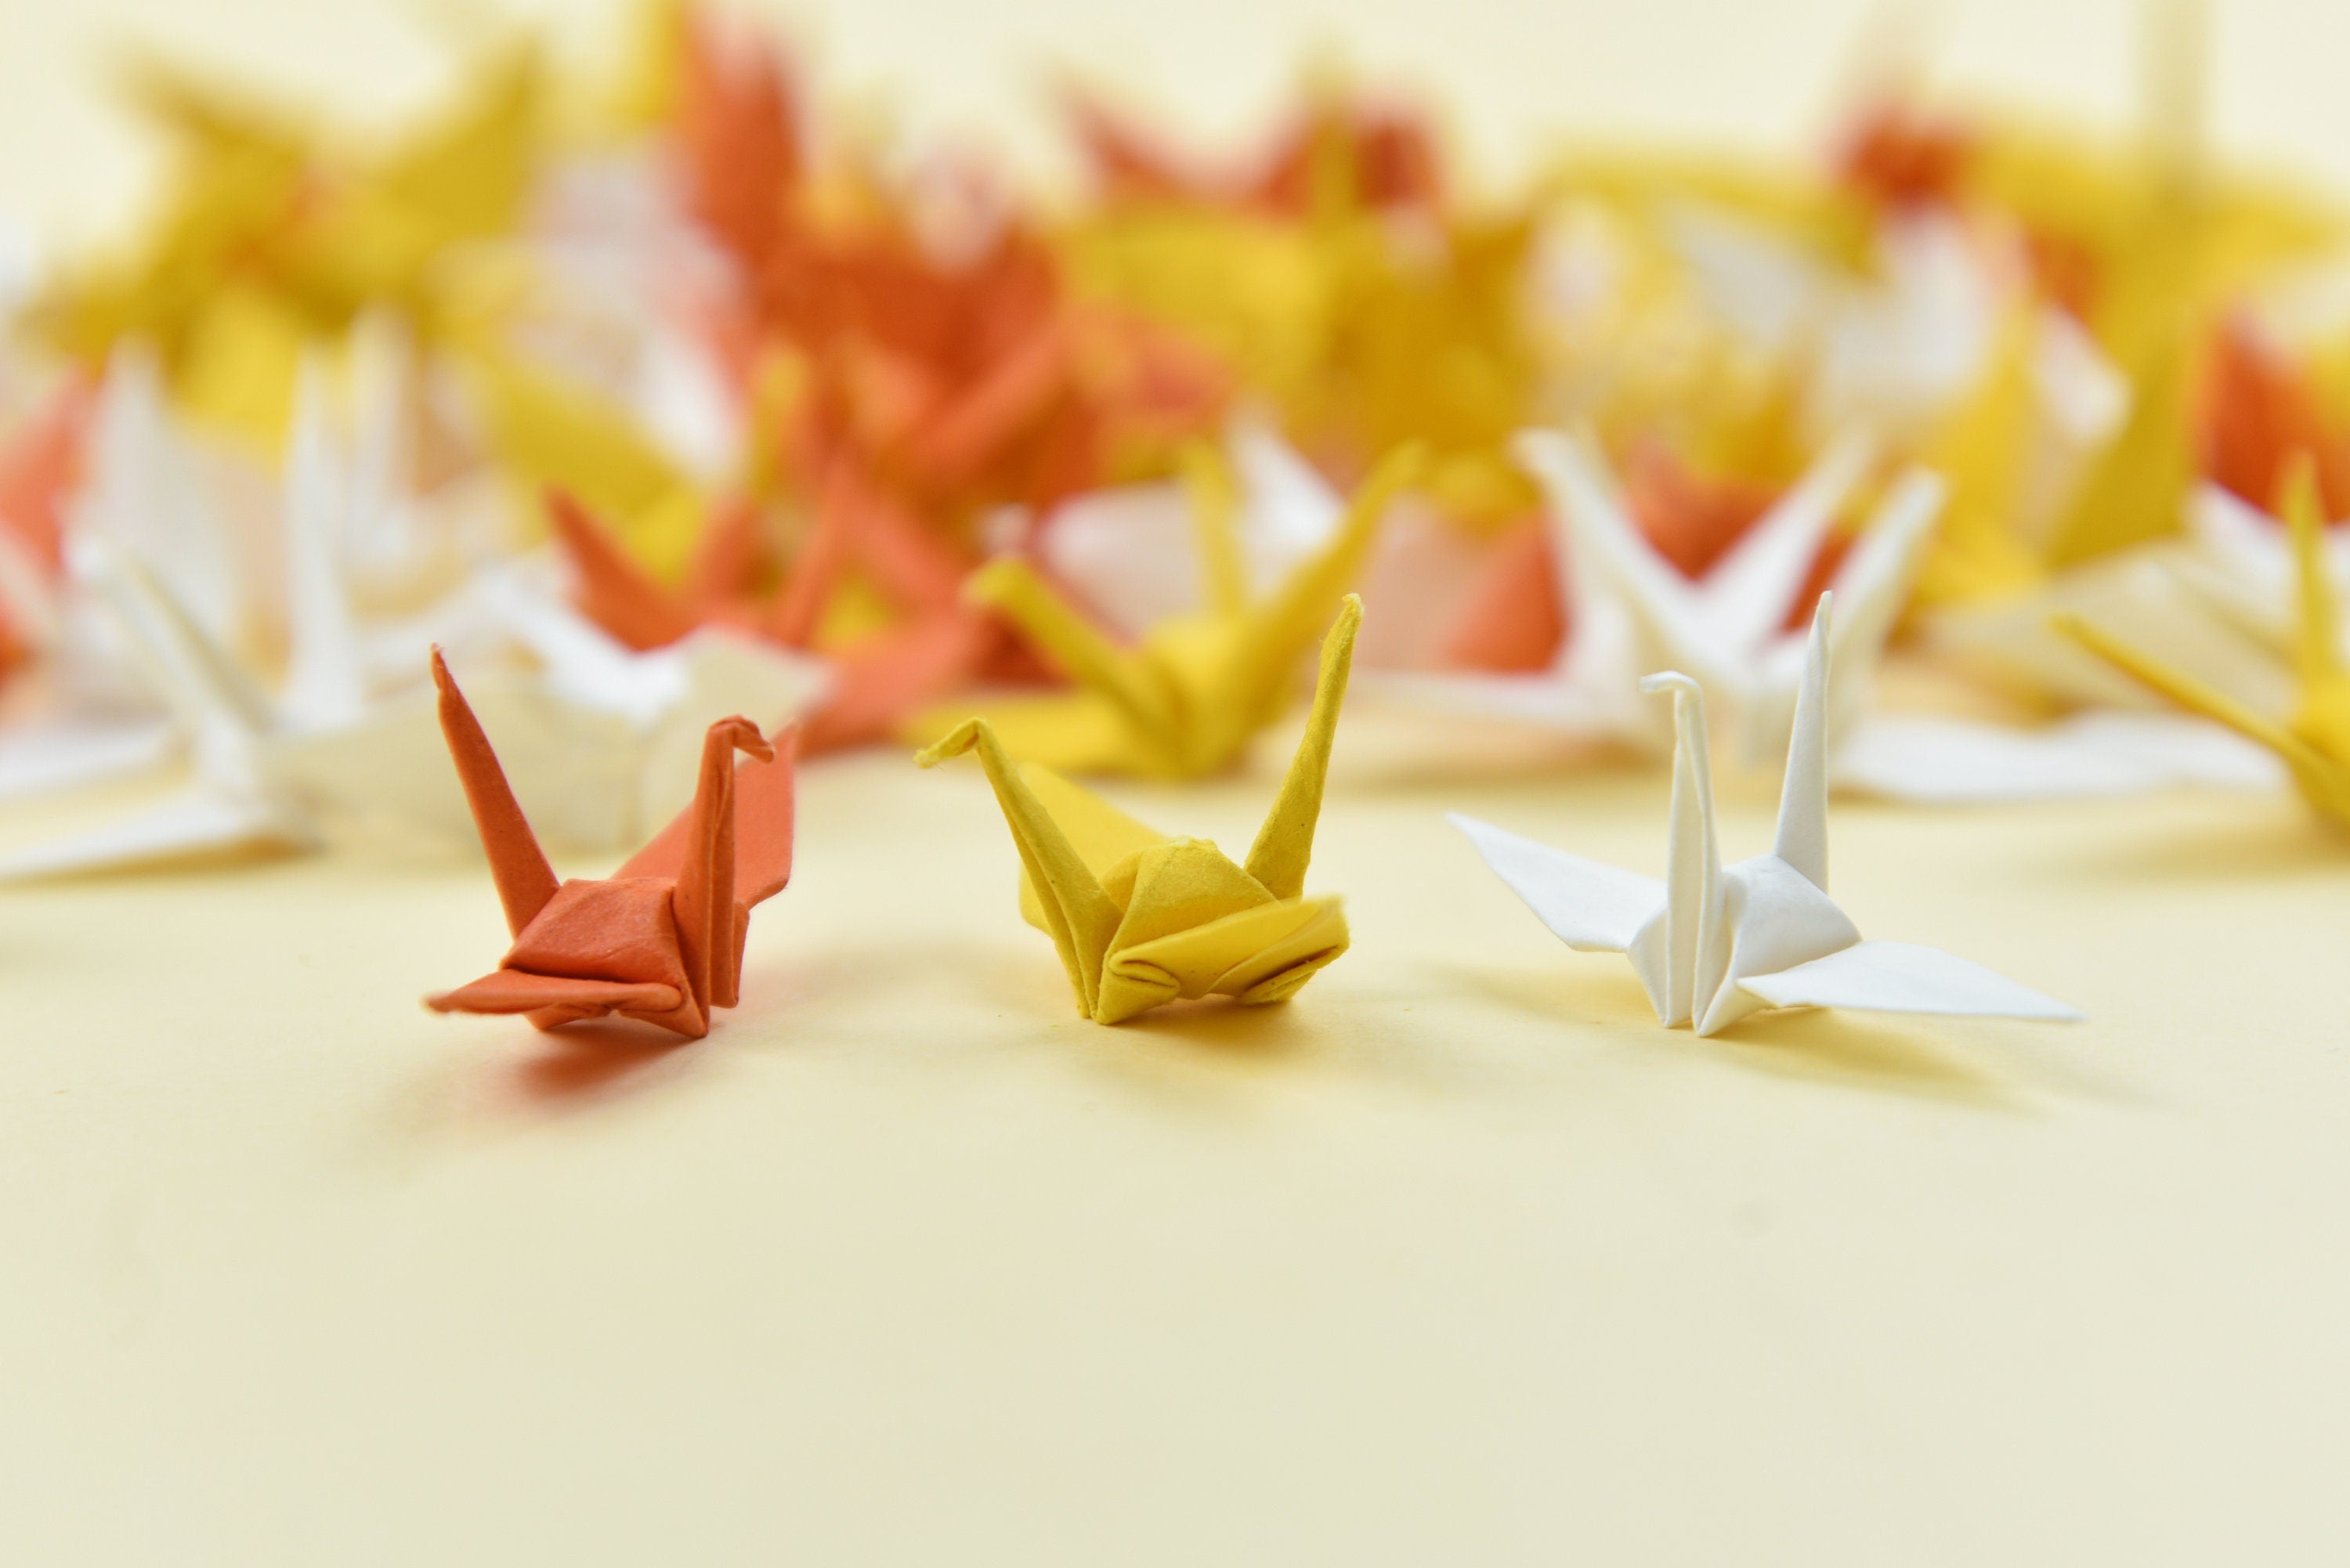 100 Origami Paper Crane for Sale 1.5 inches Ivory Orange Tone Japanese for Wedding Gift, Decoration, Wedding Backdrop